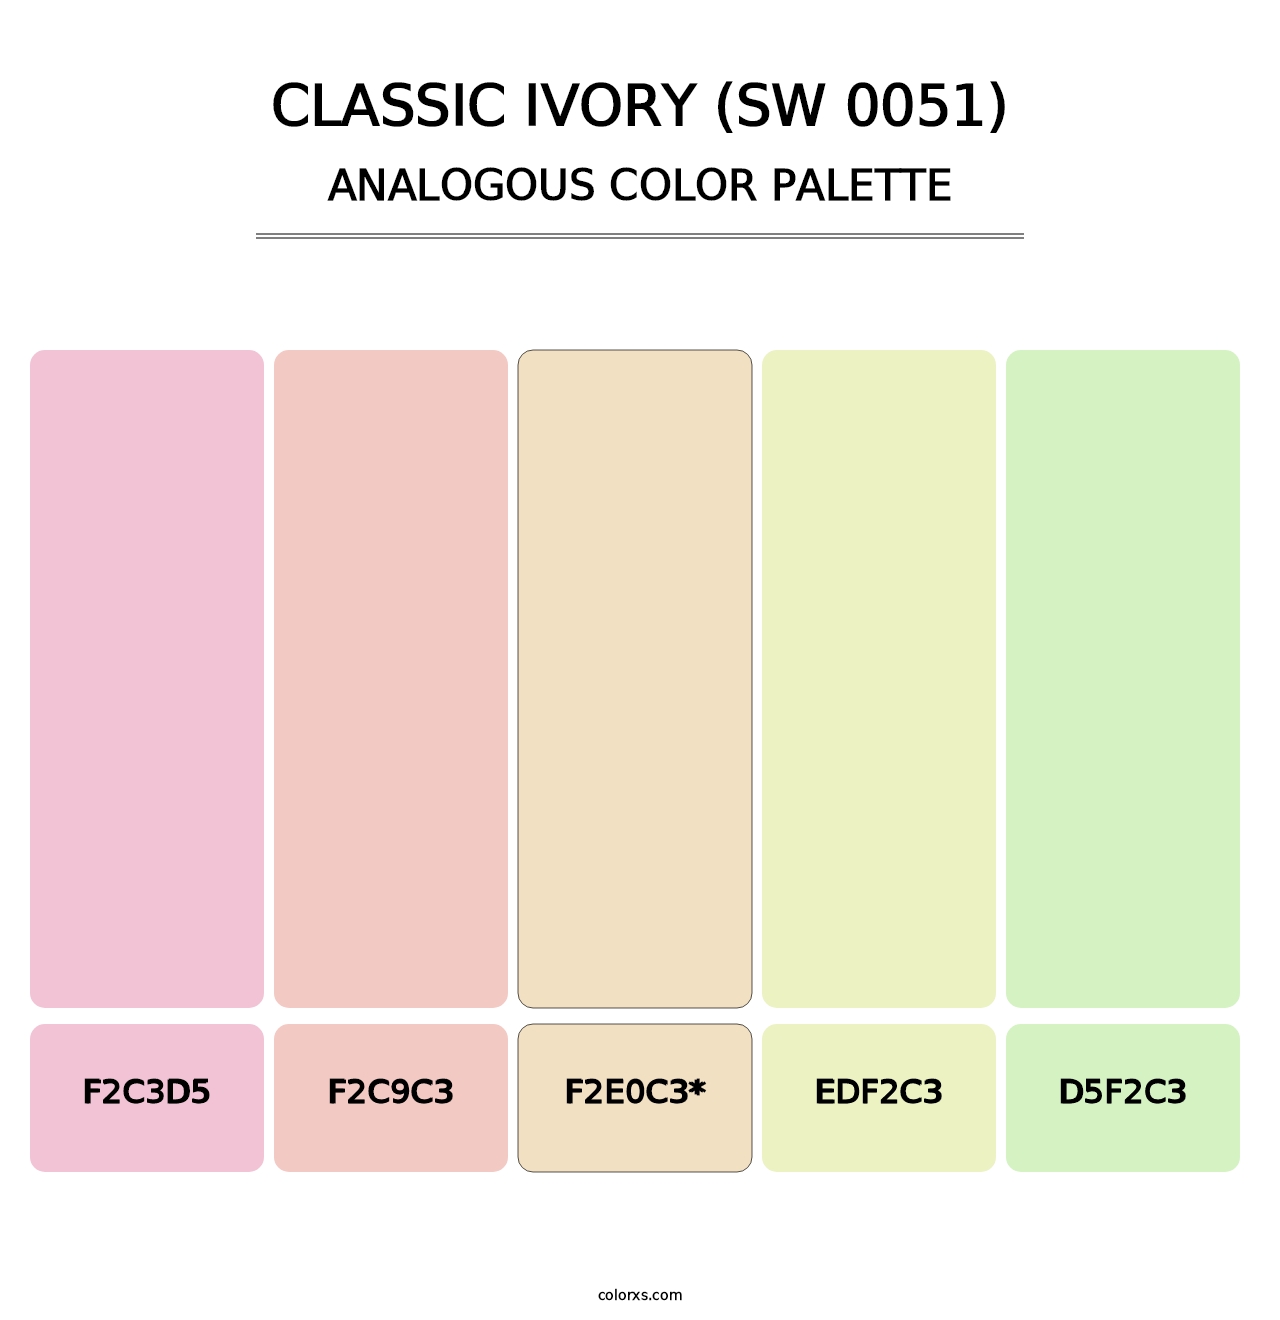 Classic Ivory (SW 0051) - Analogous Color Palette